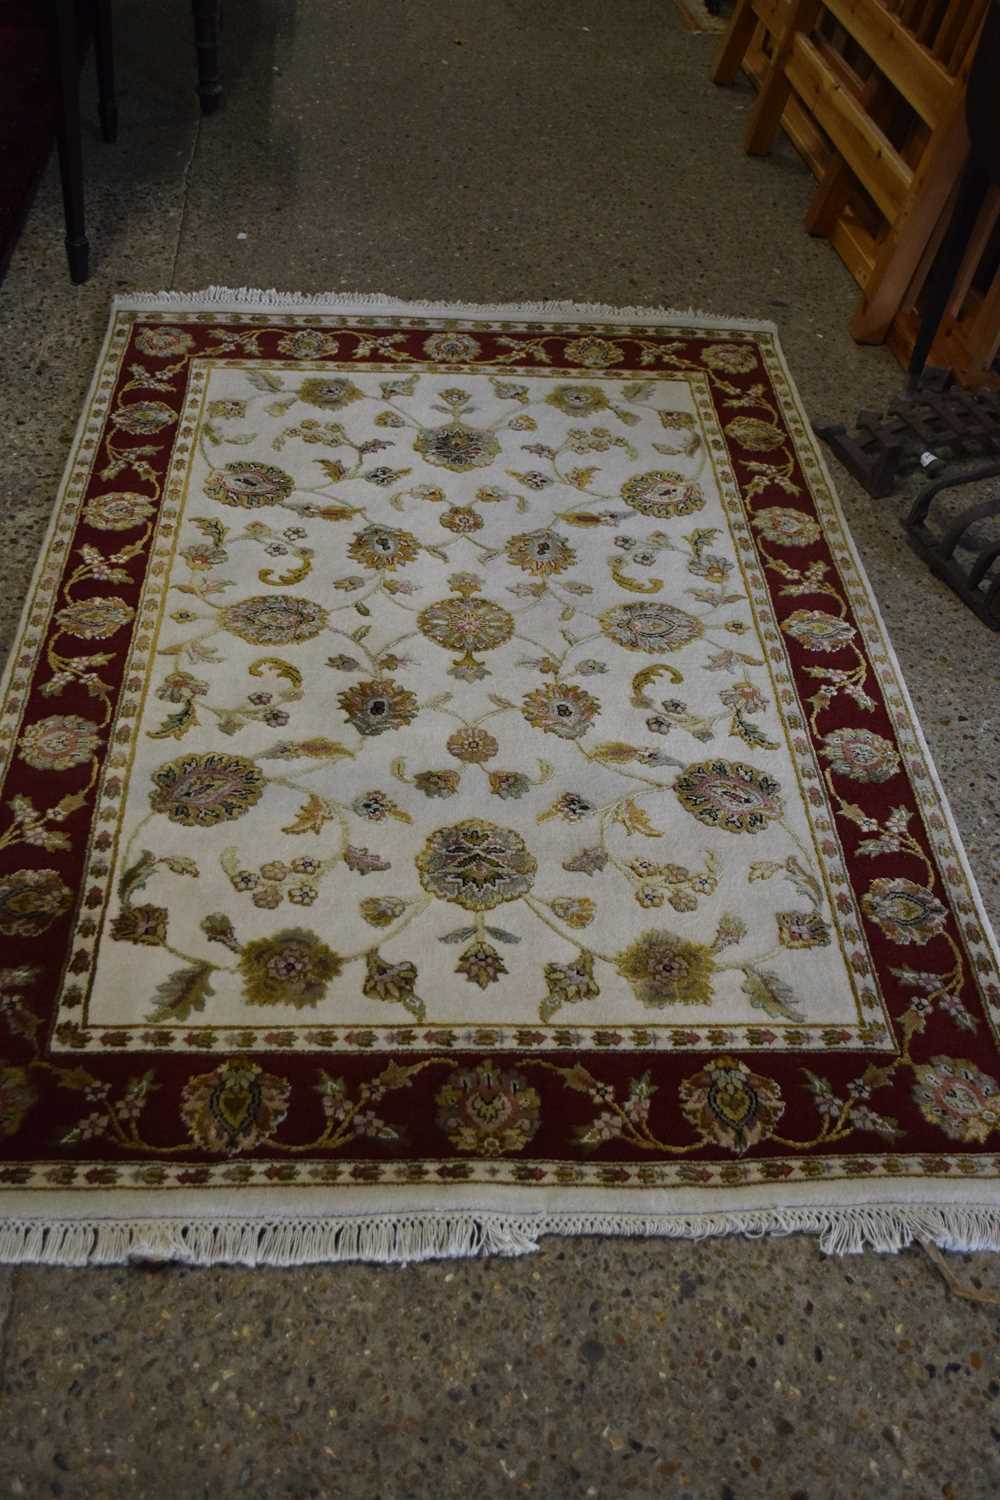 Modern floral pattern carpet